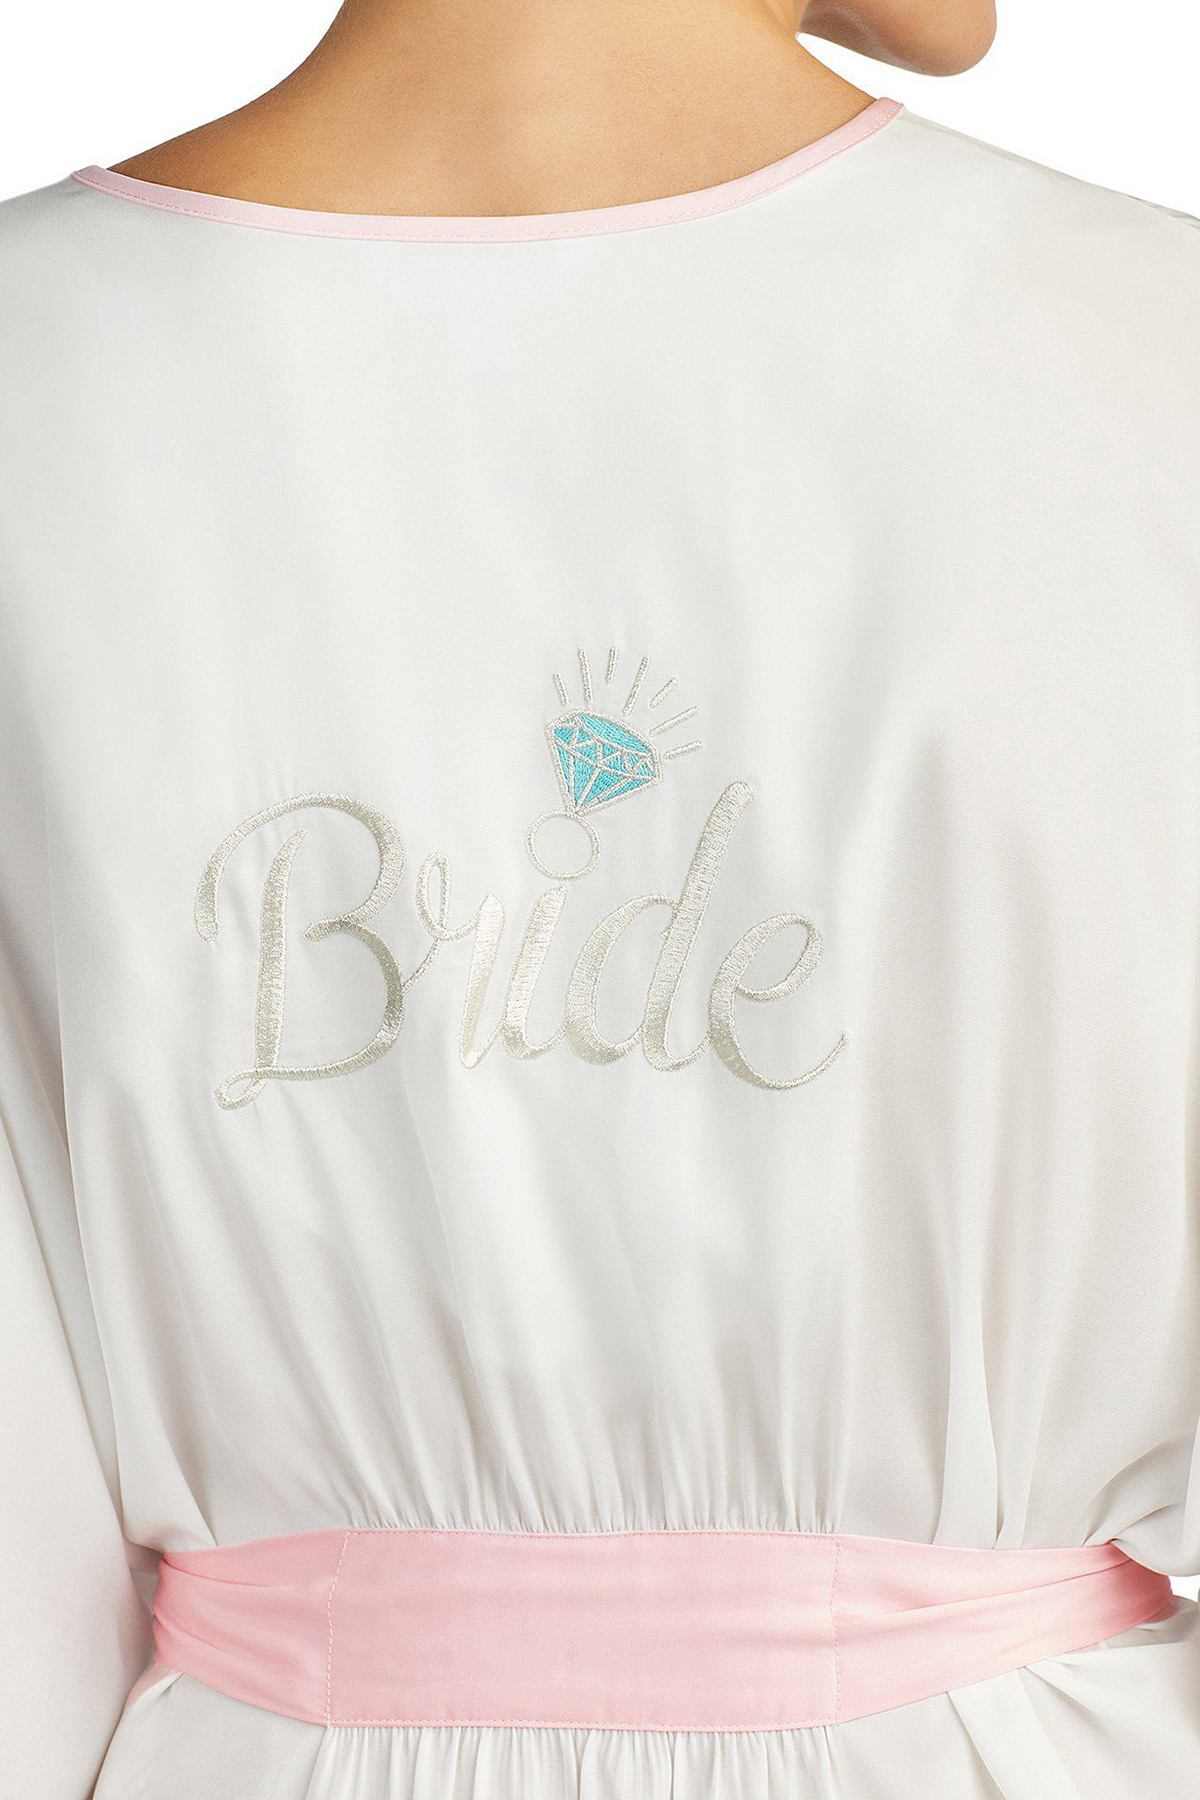 Betsey Johnson Cream-White Satin Bridal Robe